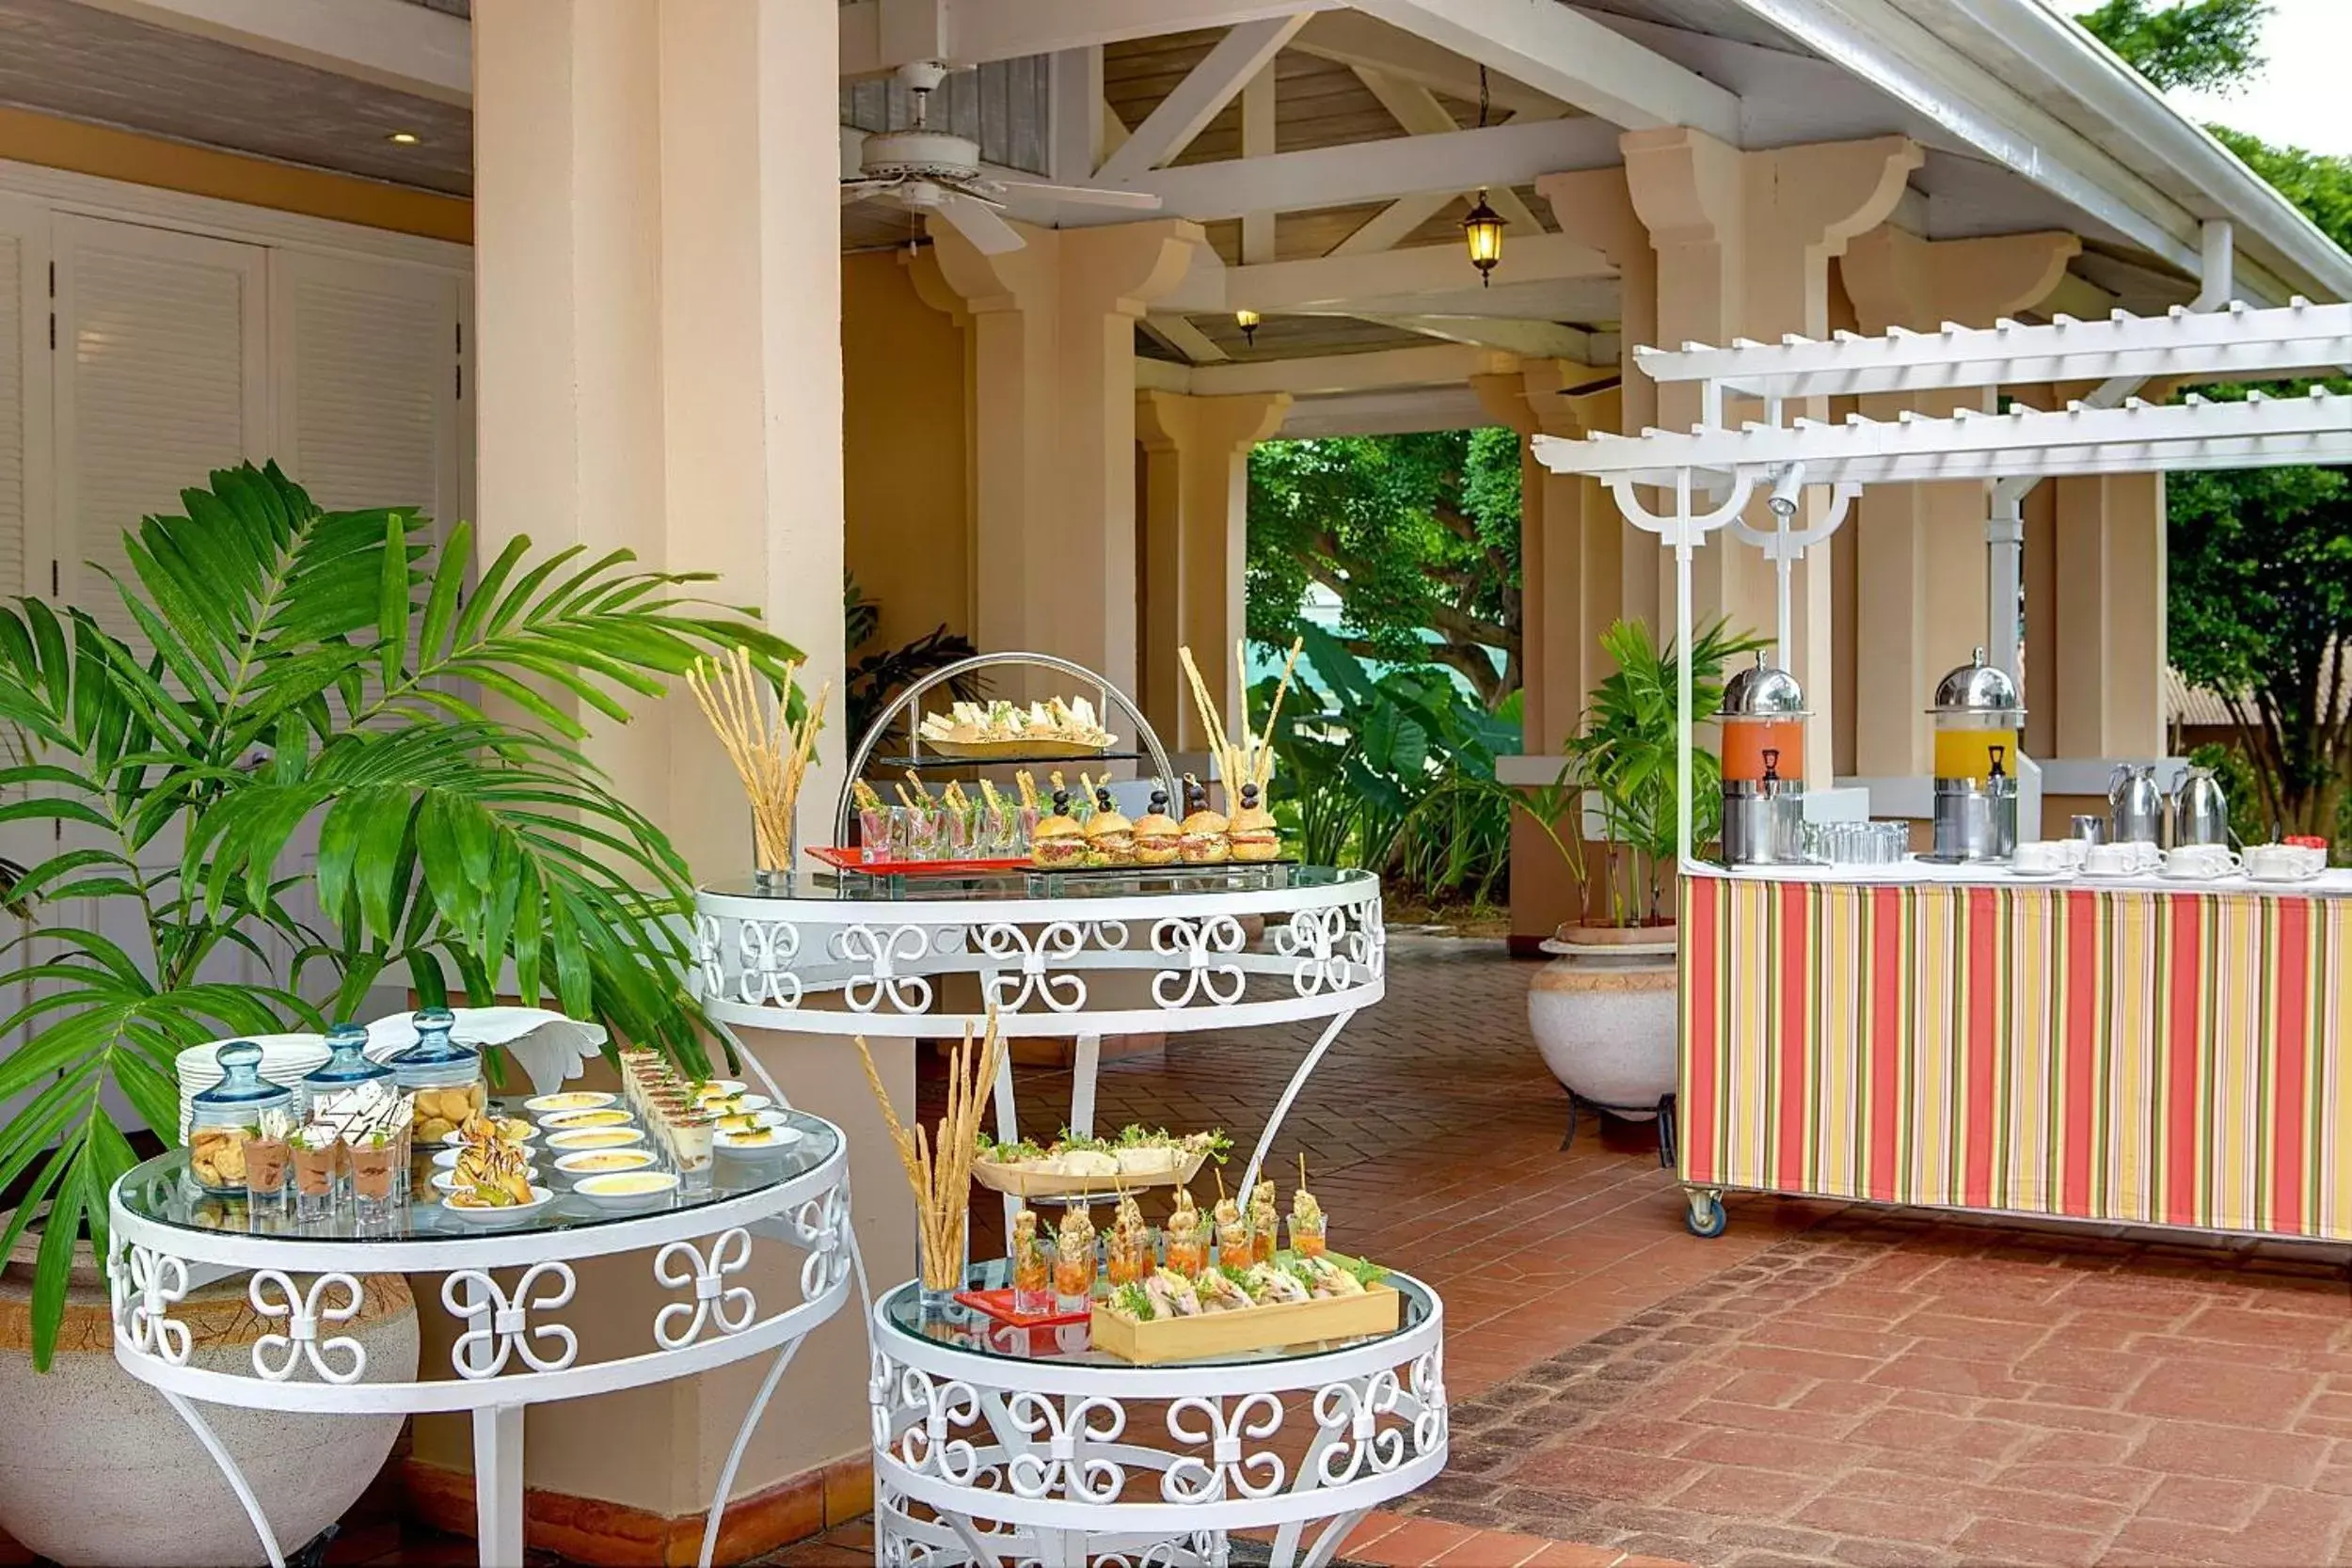 Banquet/Function facilities, Restaurant/Places to Eat in Sugar Beach Mauritius